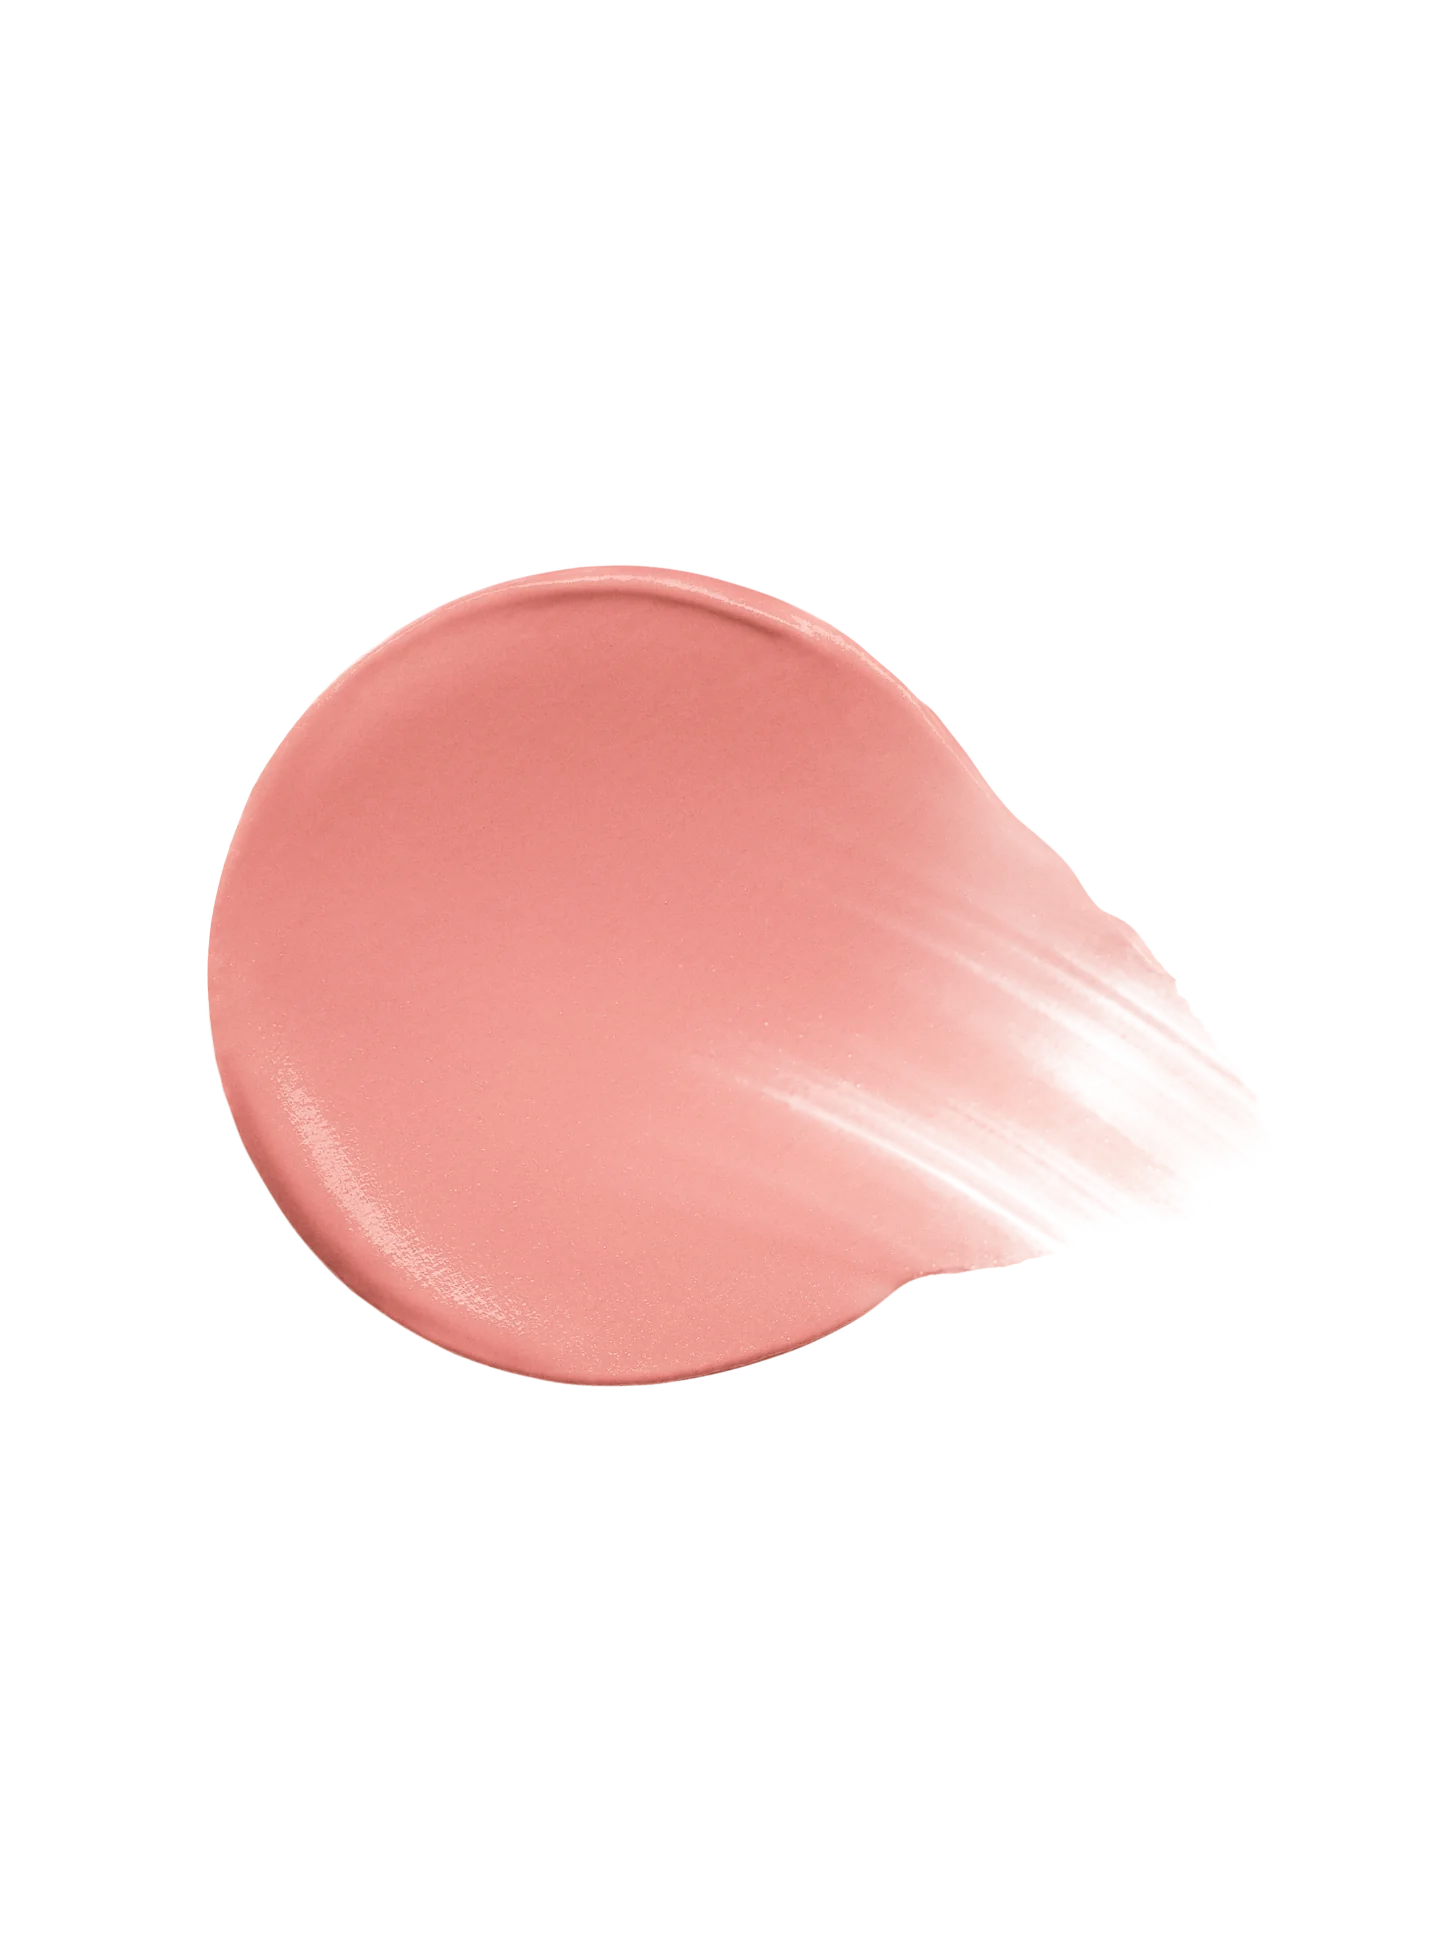 Sephora Sale: Rare Beauty | Soft Pinch Liquid Blush | Bliss